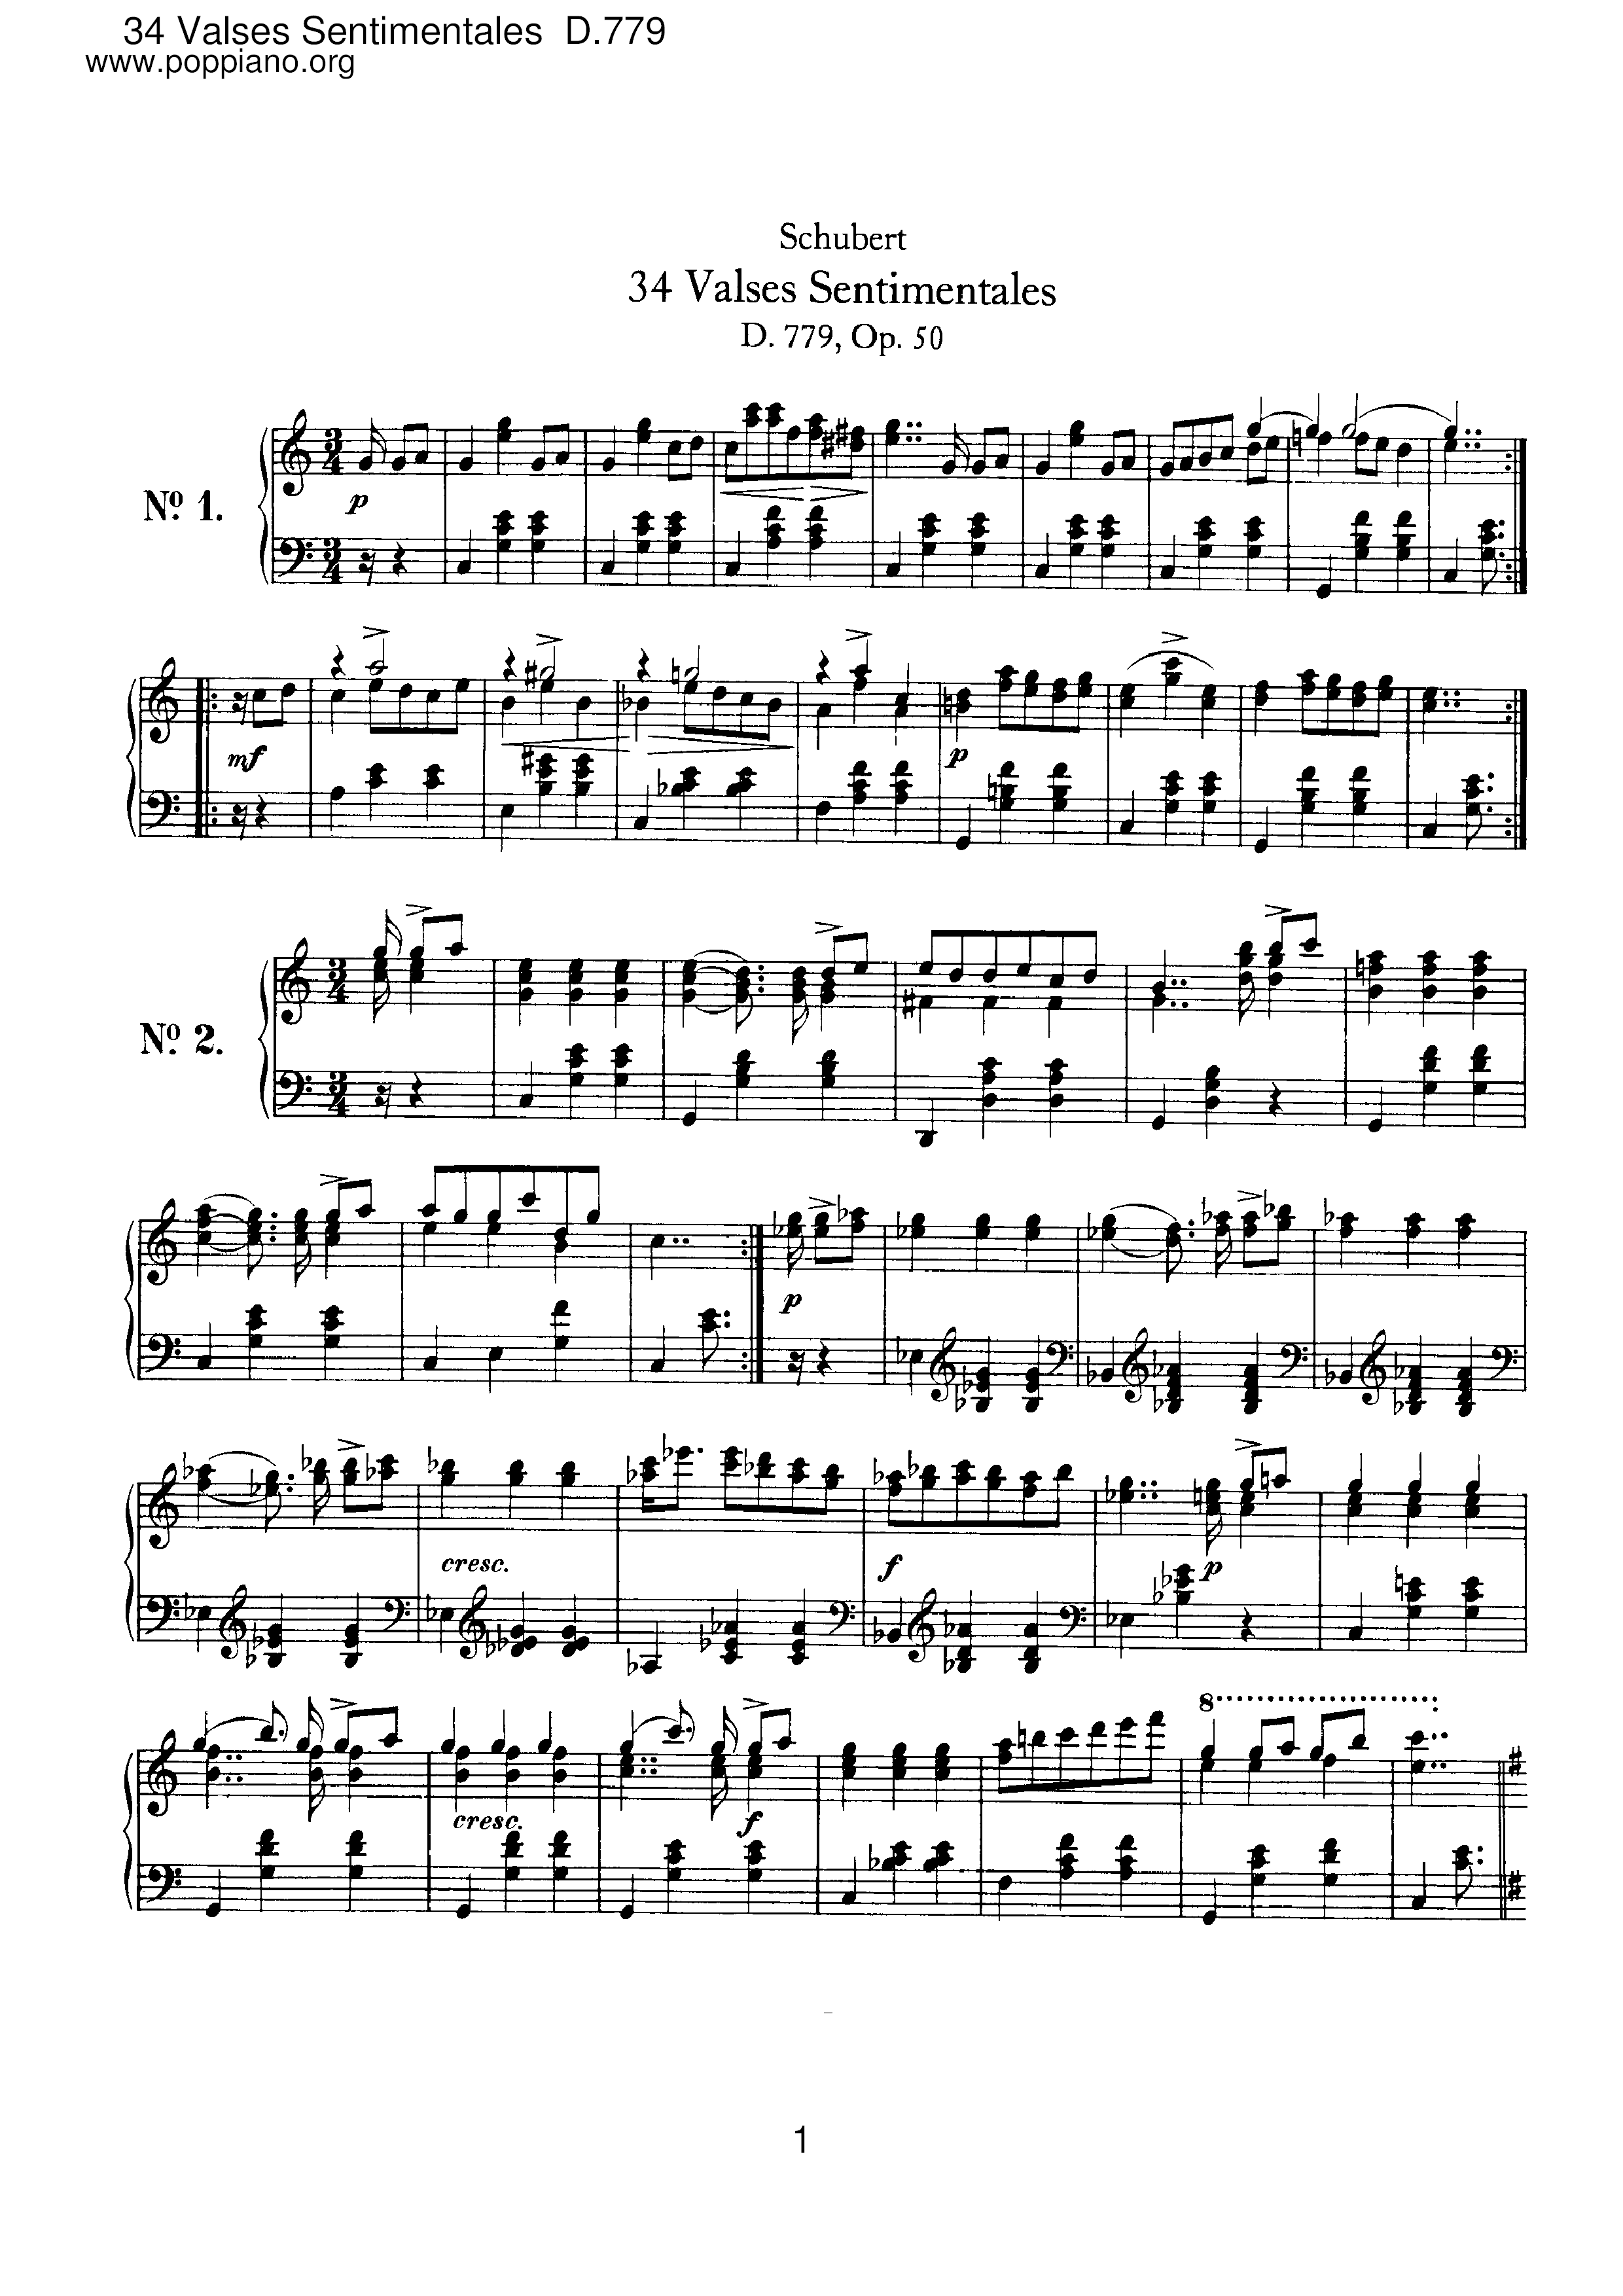 34 Valses Sentimentales, D.779 (Op.50) Score